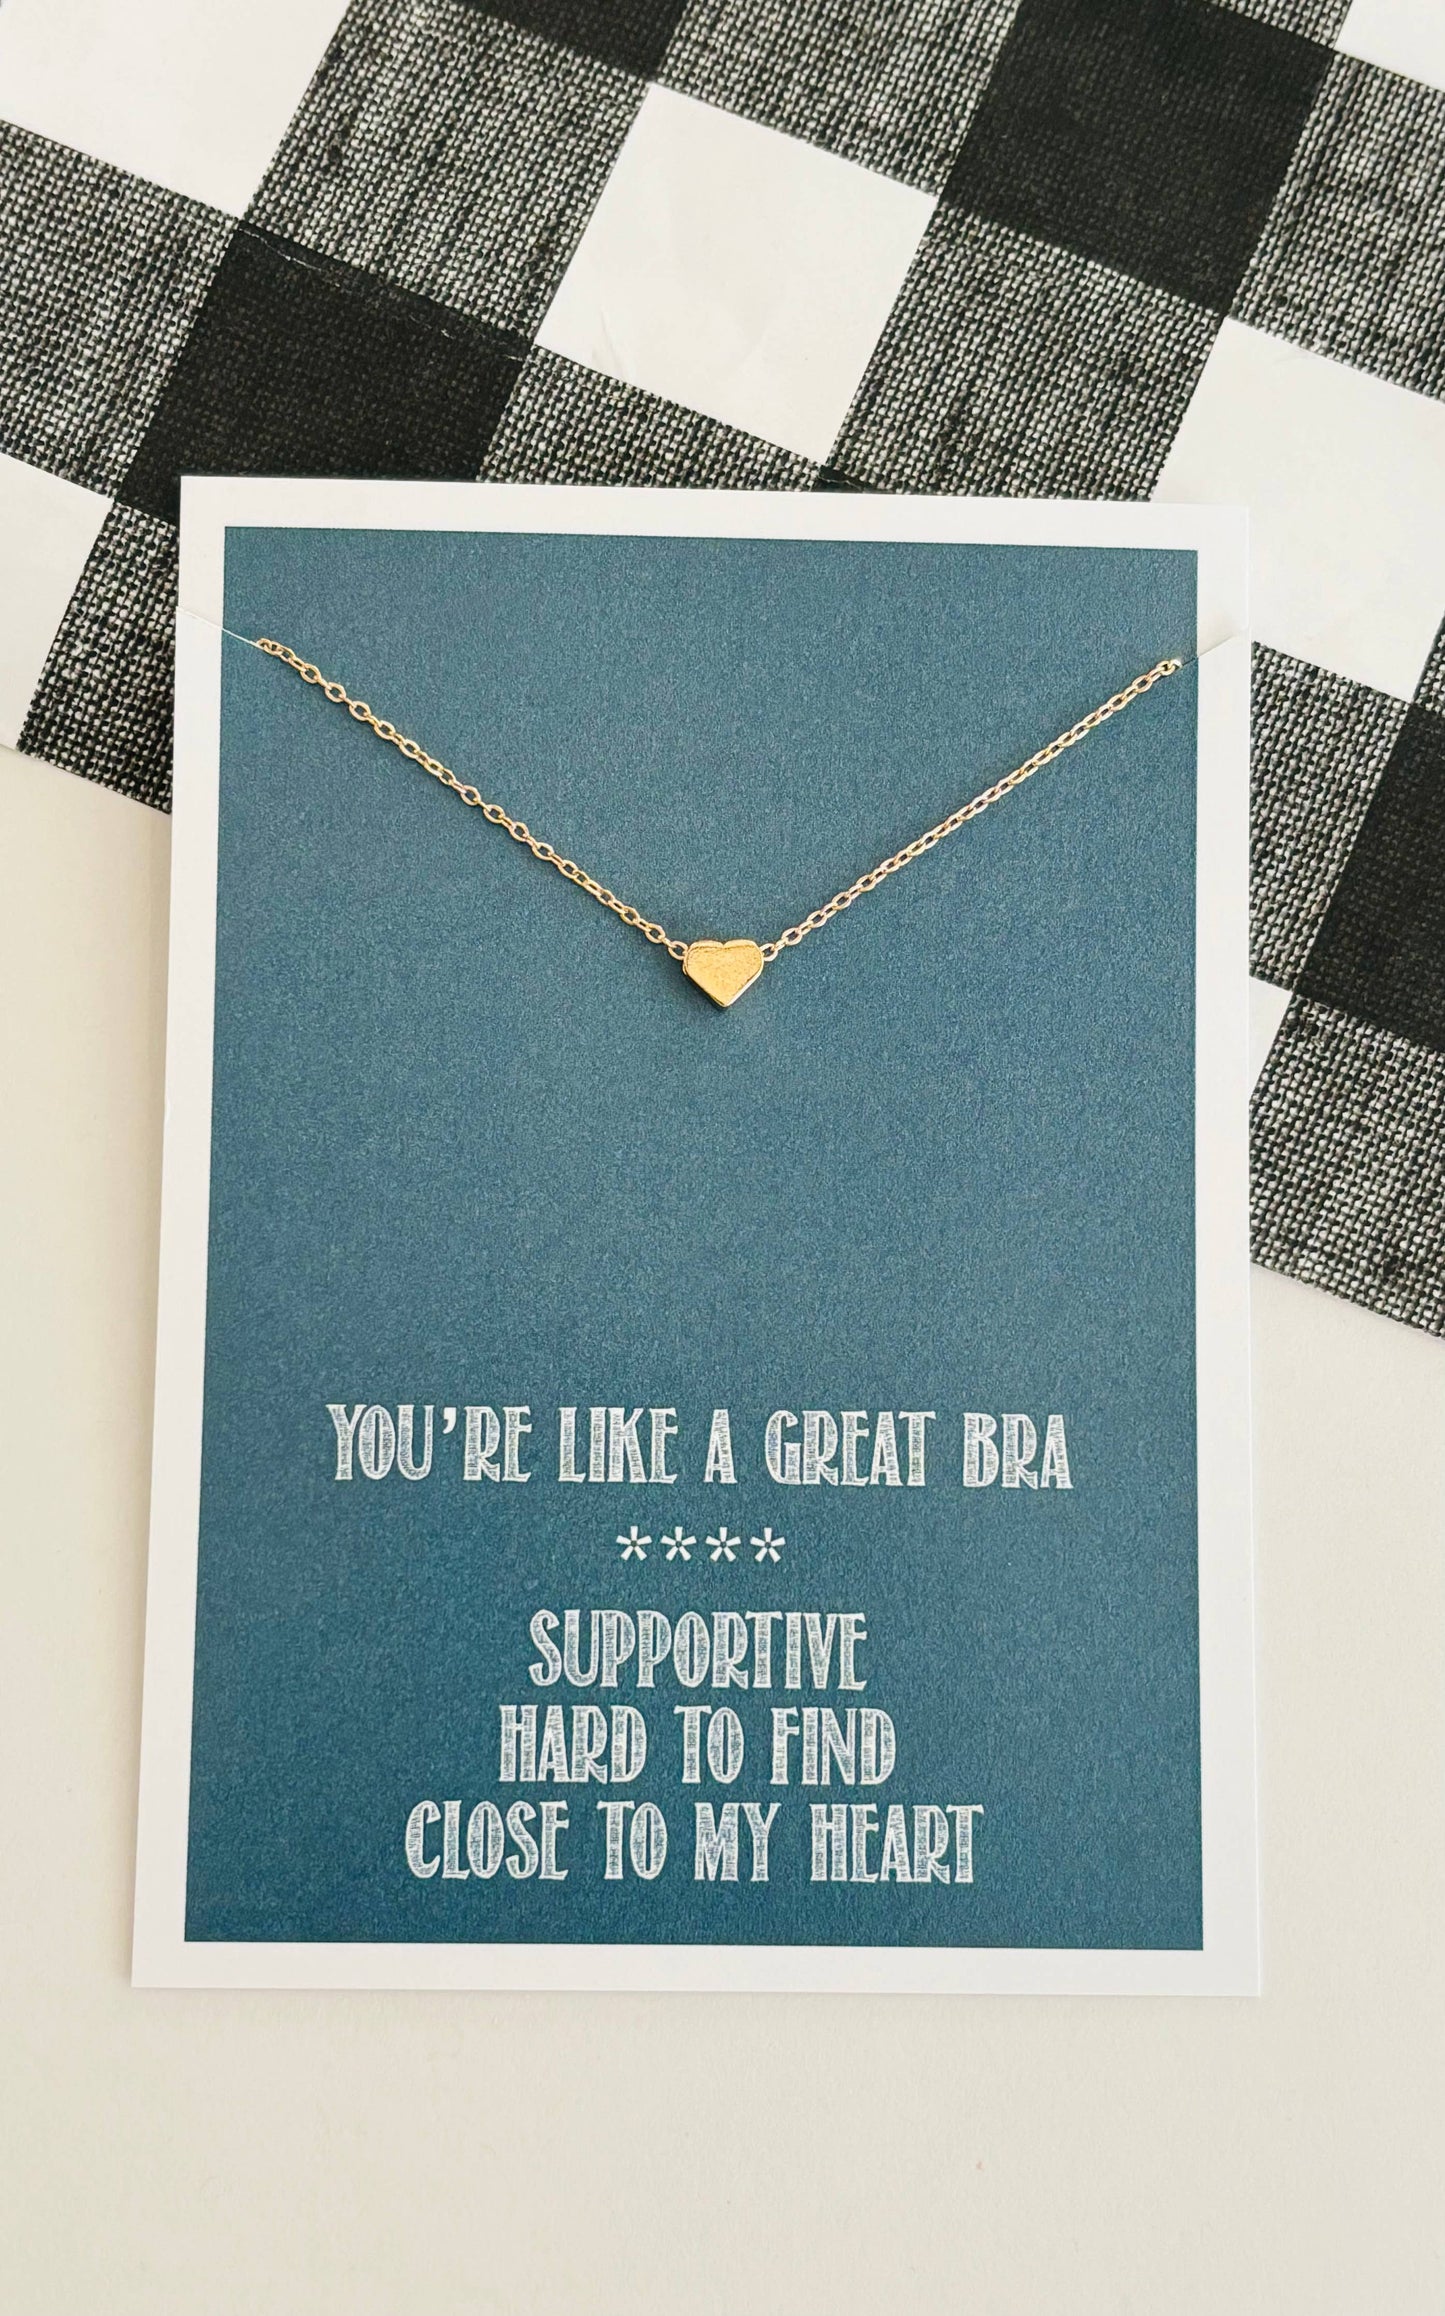 Hilarious Best Friend Heart Necklace & Card: Yellow Gold